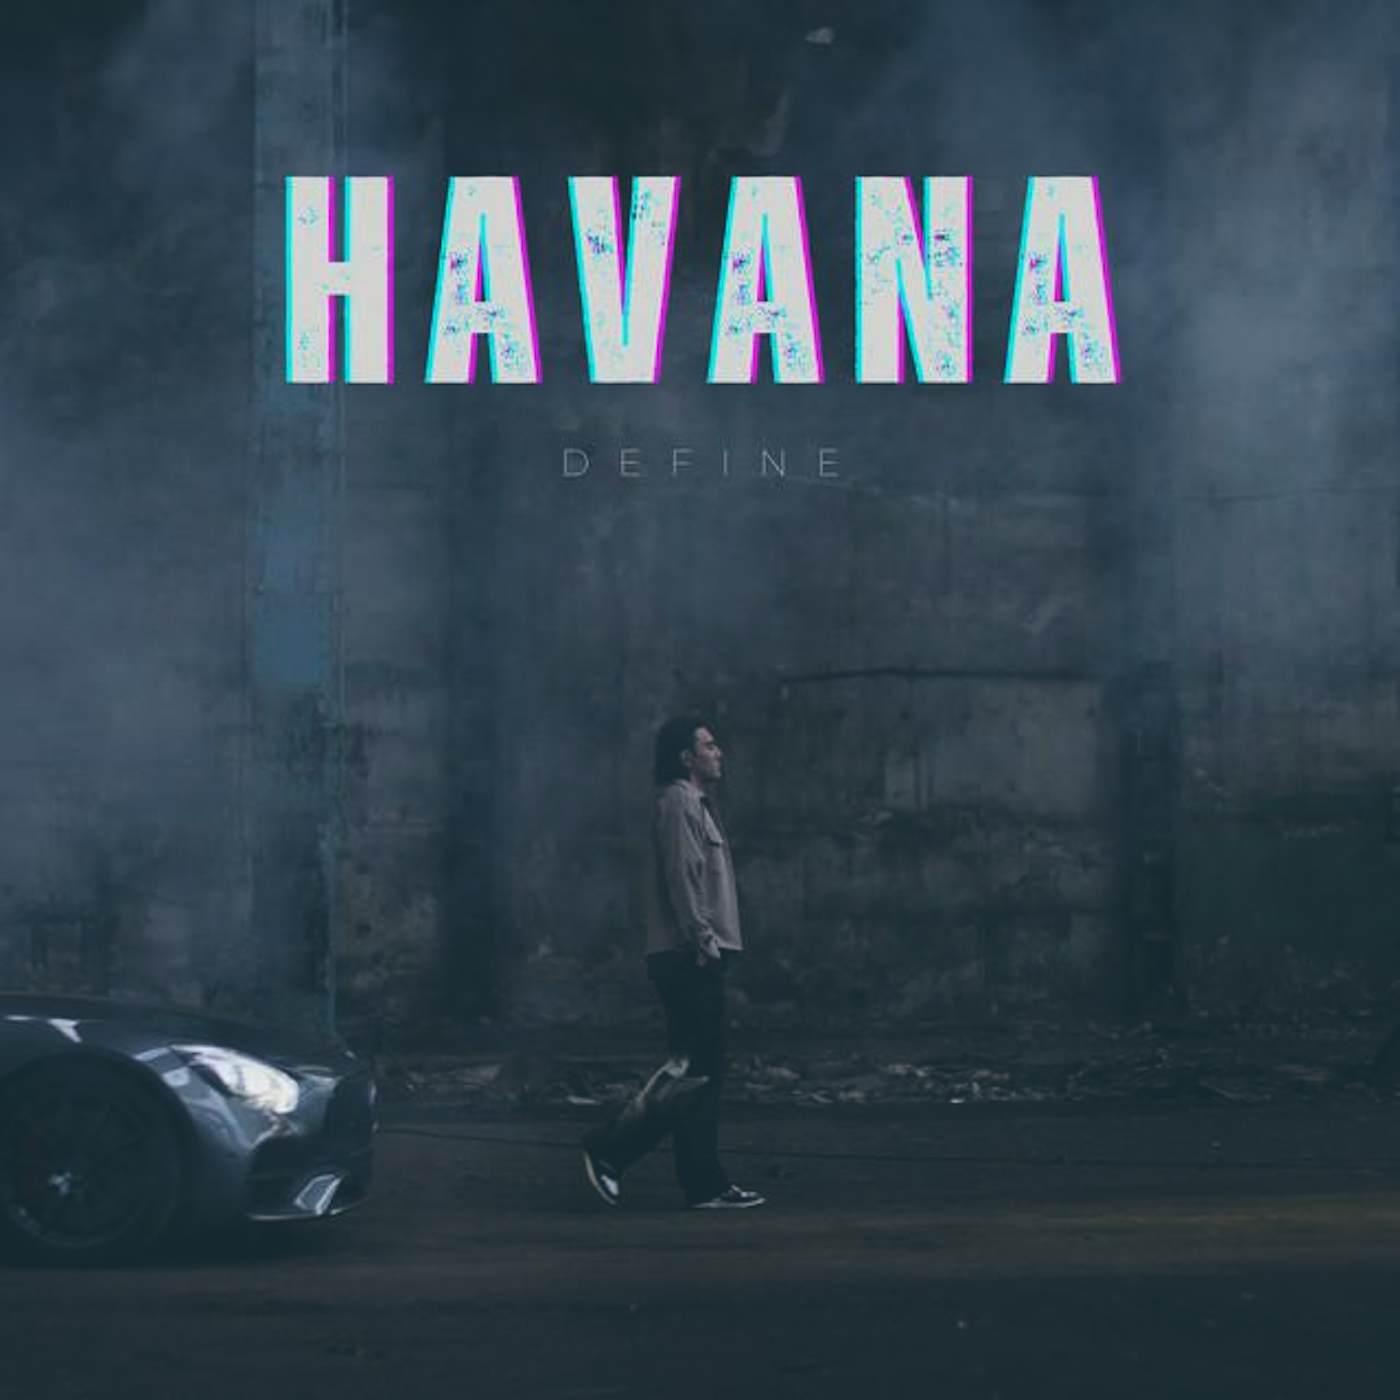 Havana